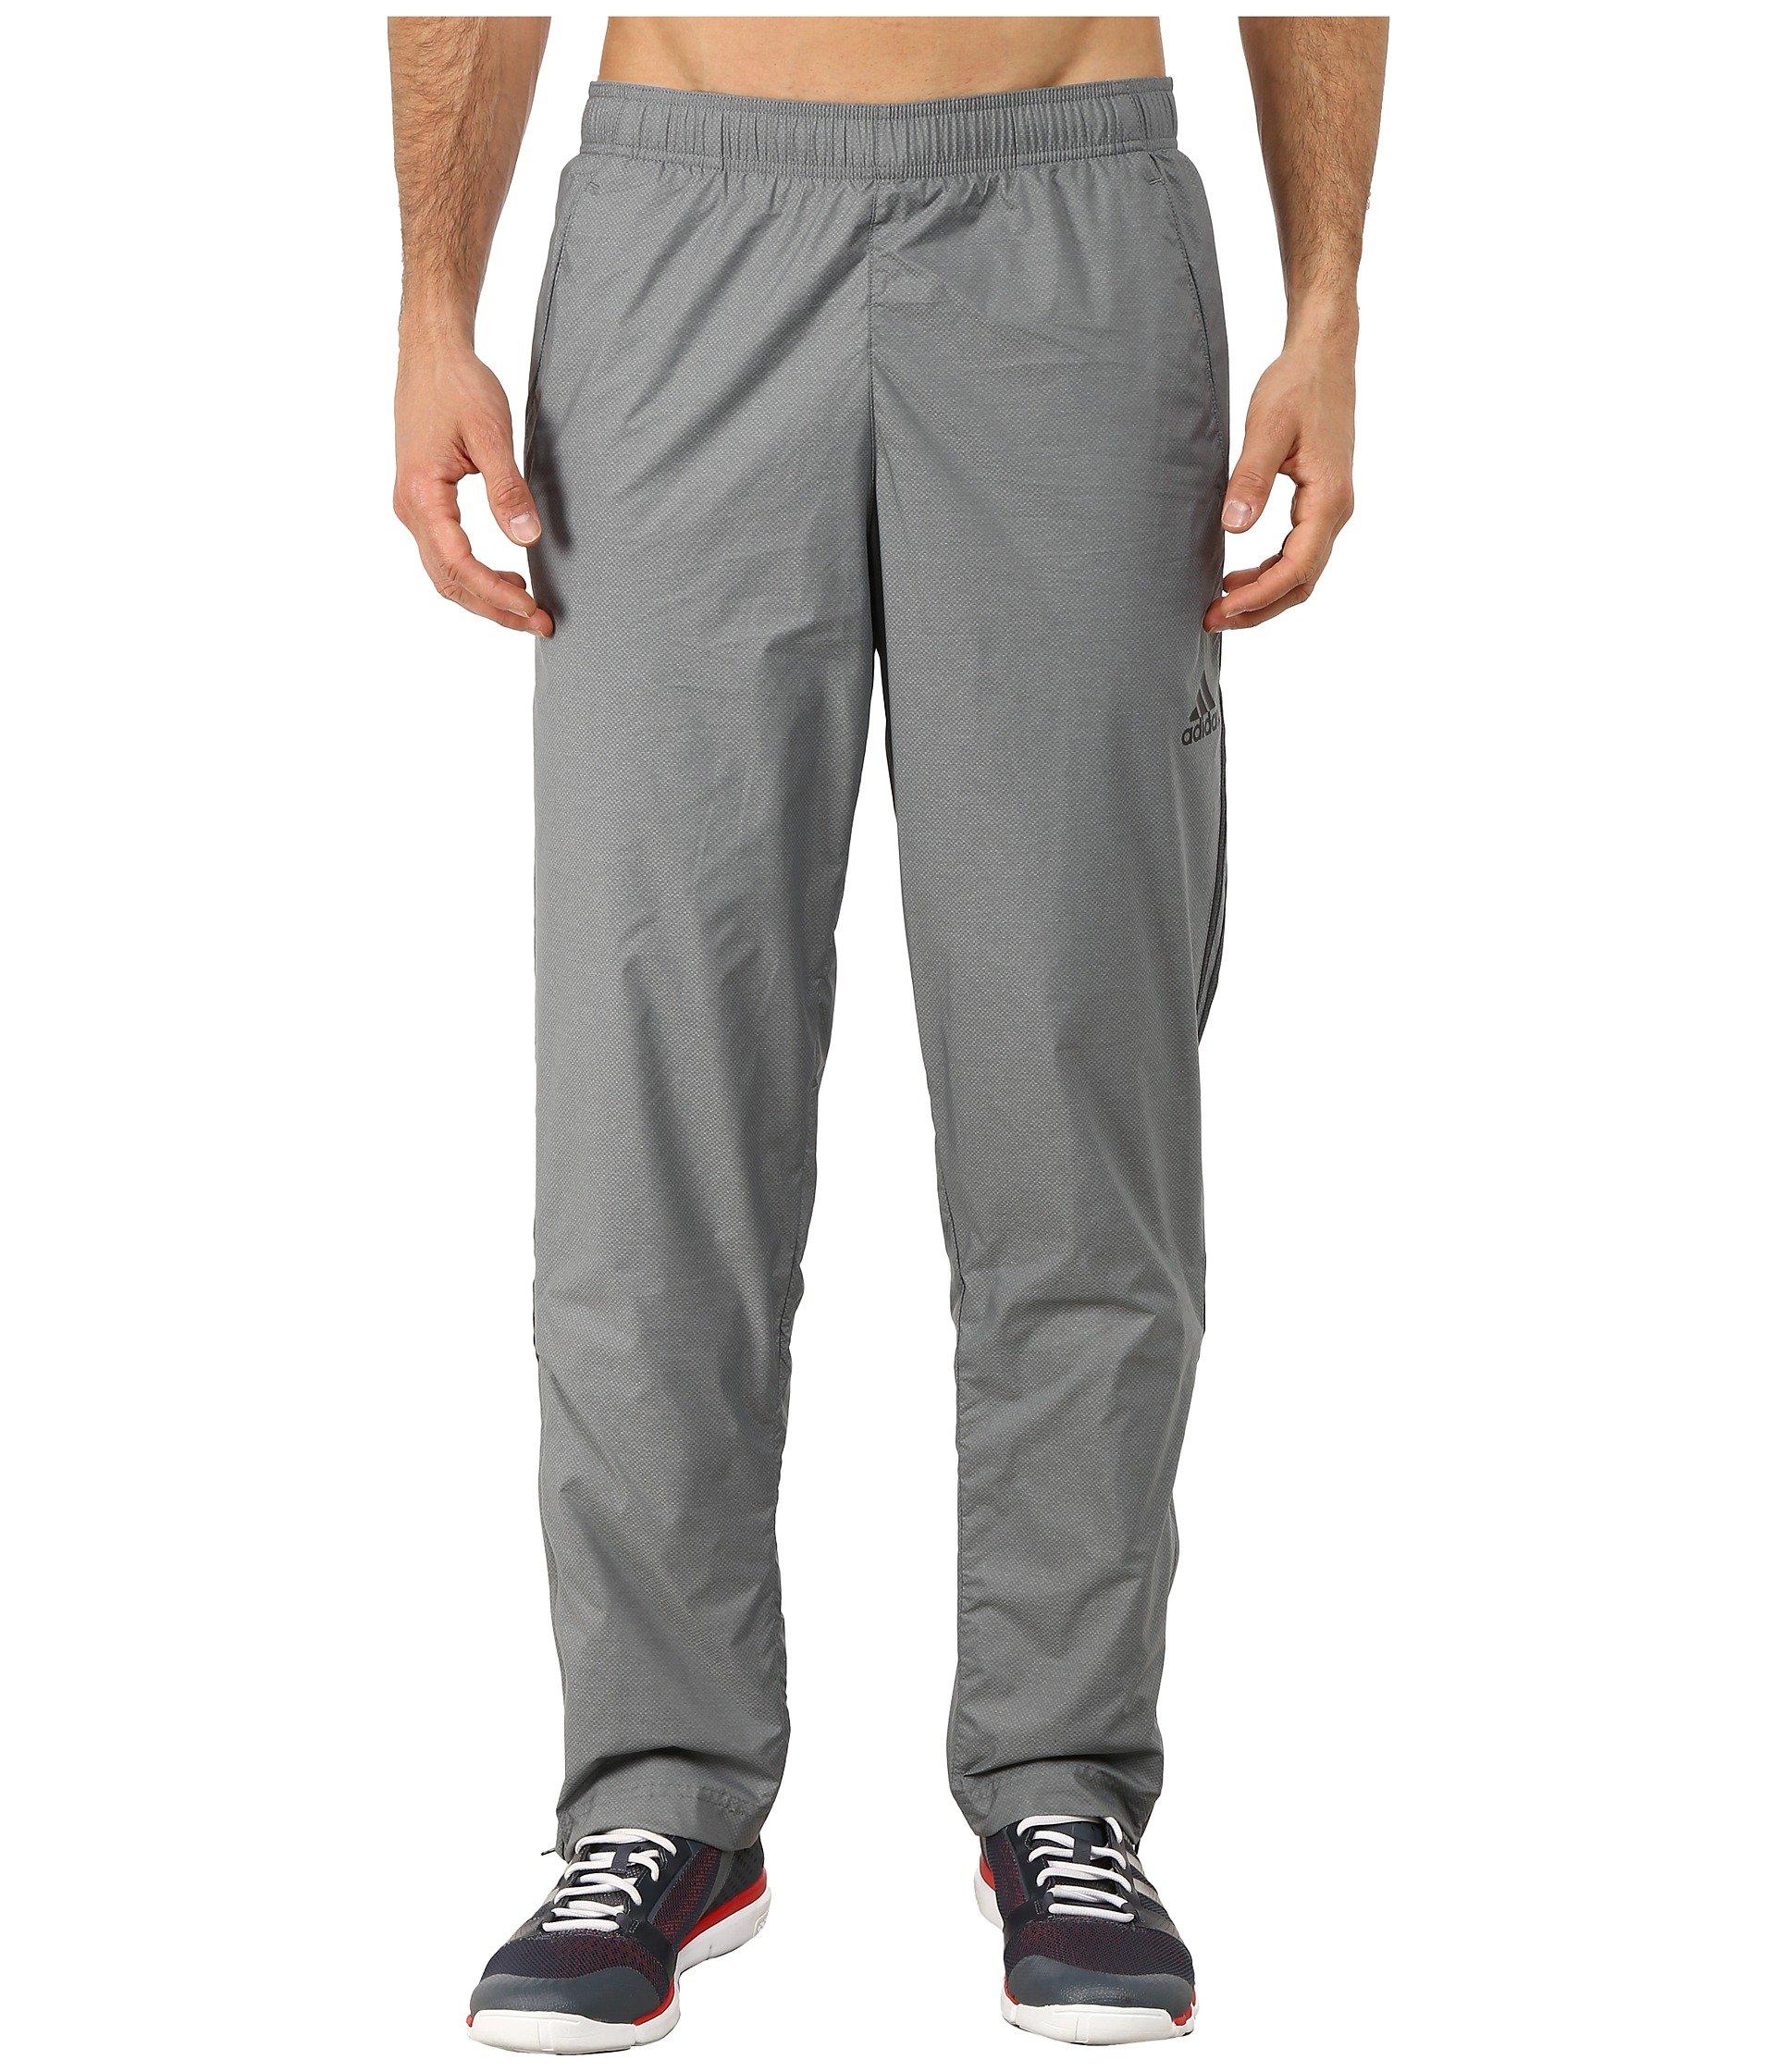 Adidas Originals Essential 3s Woven Pants In Vista Grey/black | ModeSens